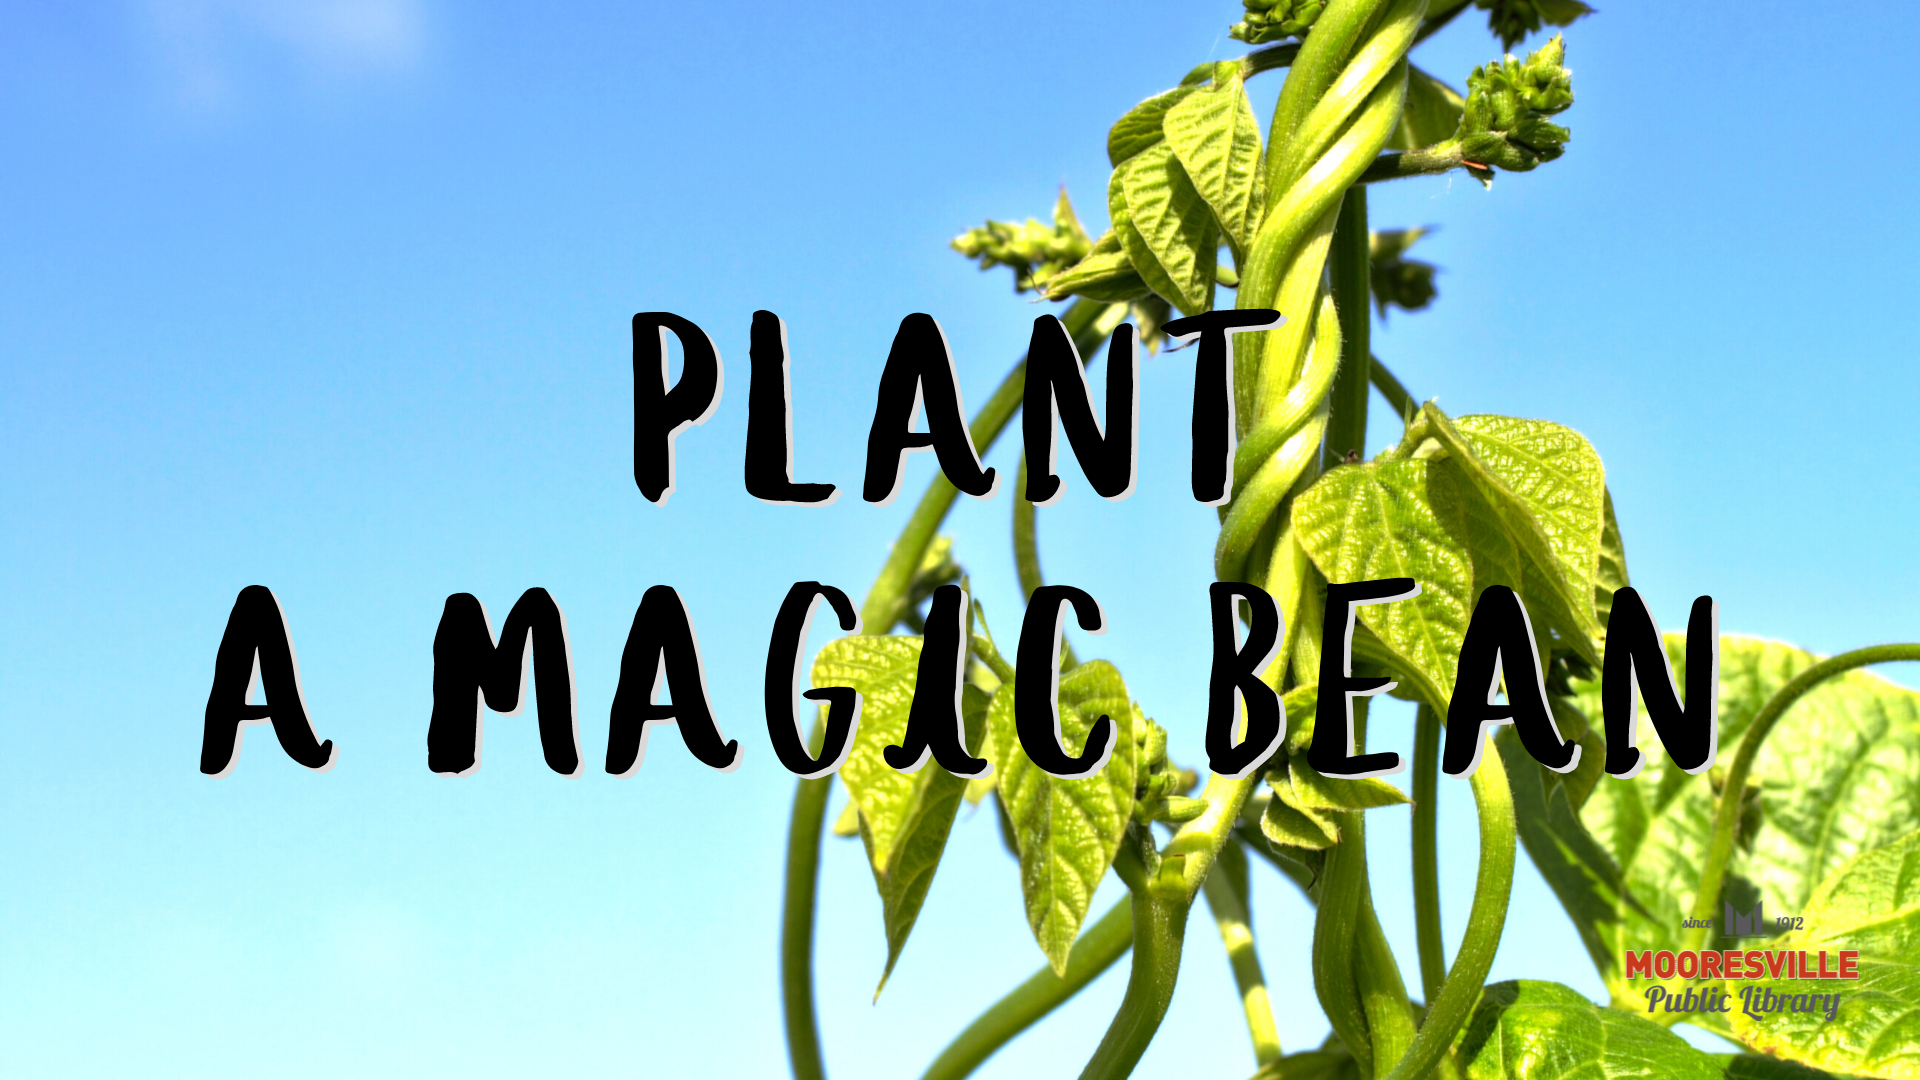 magic bean seeds gift plant